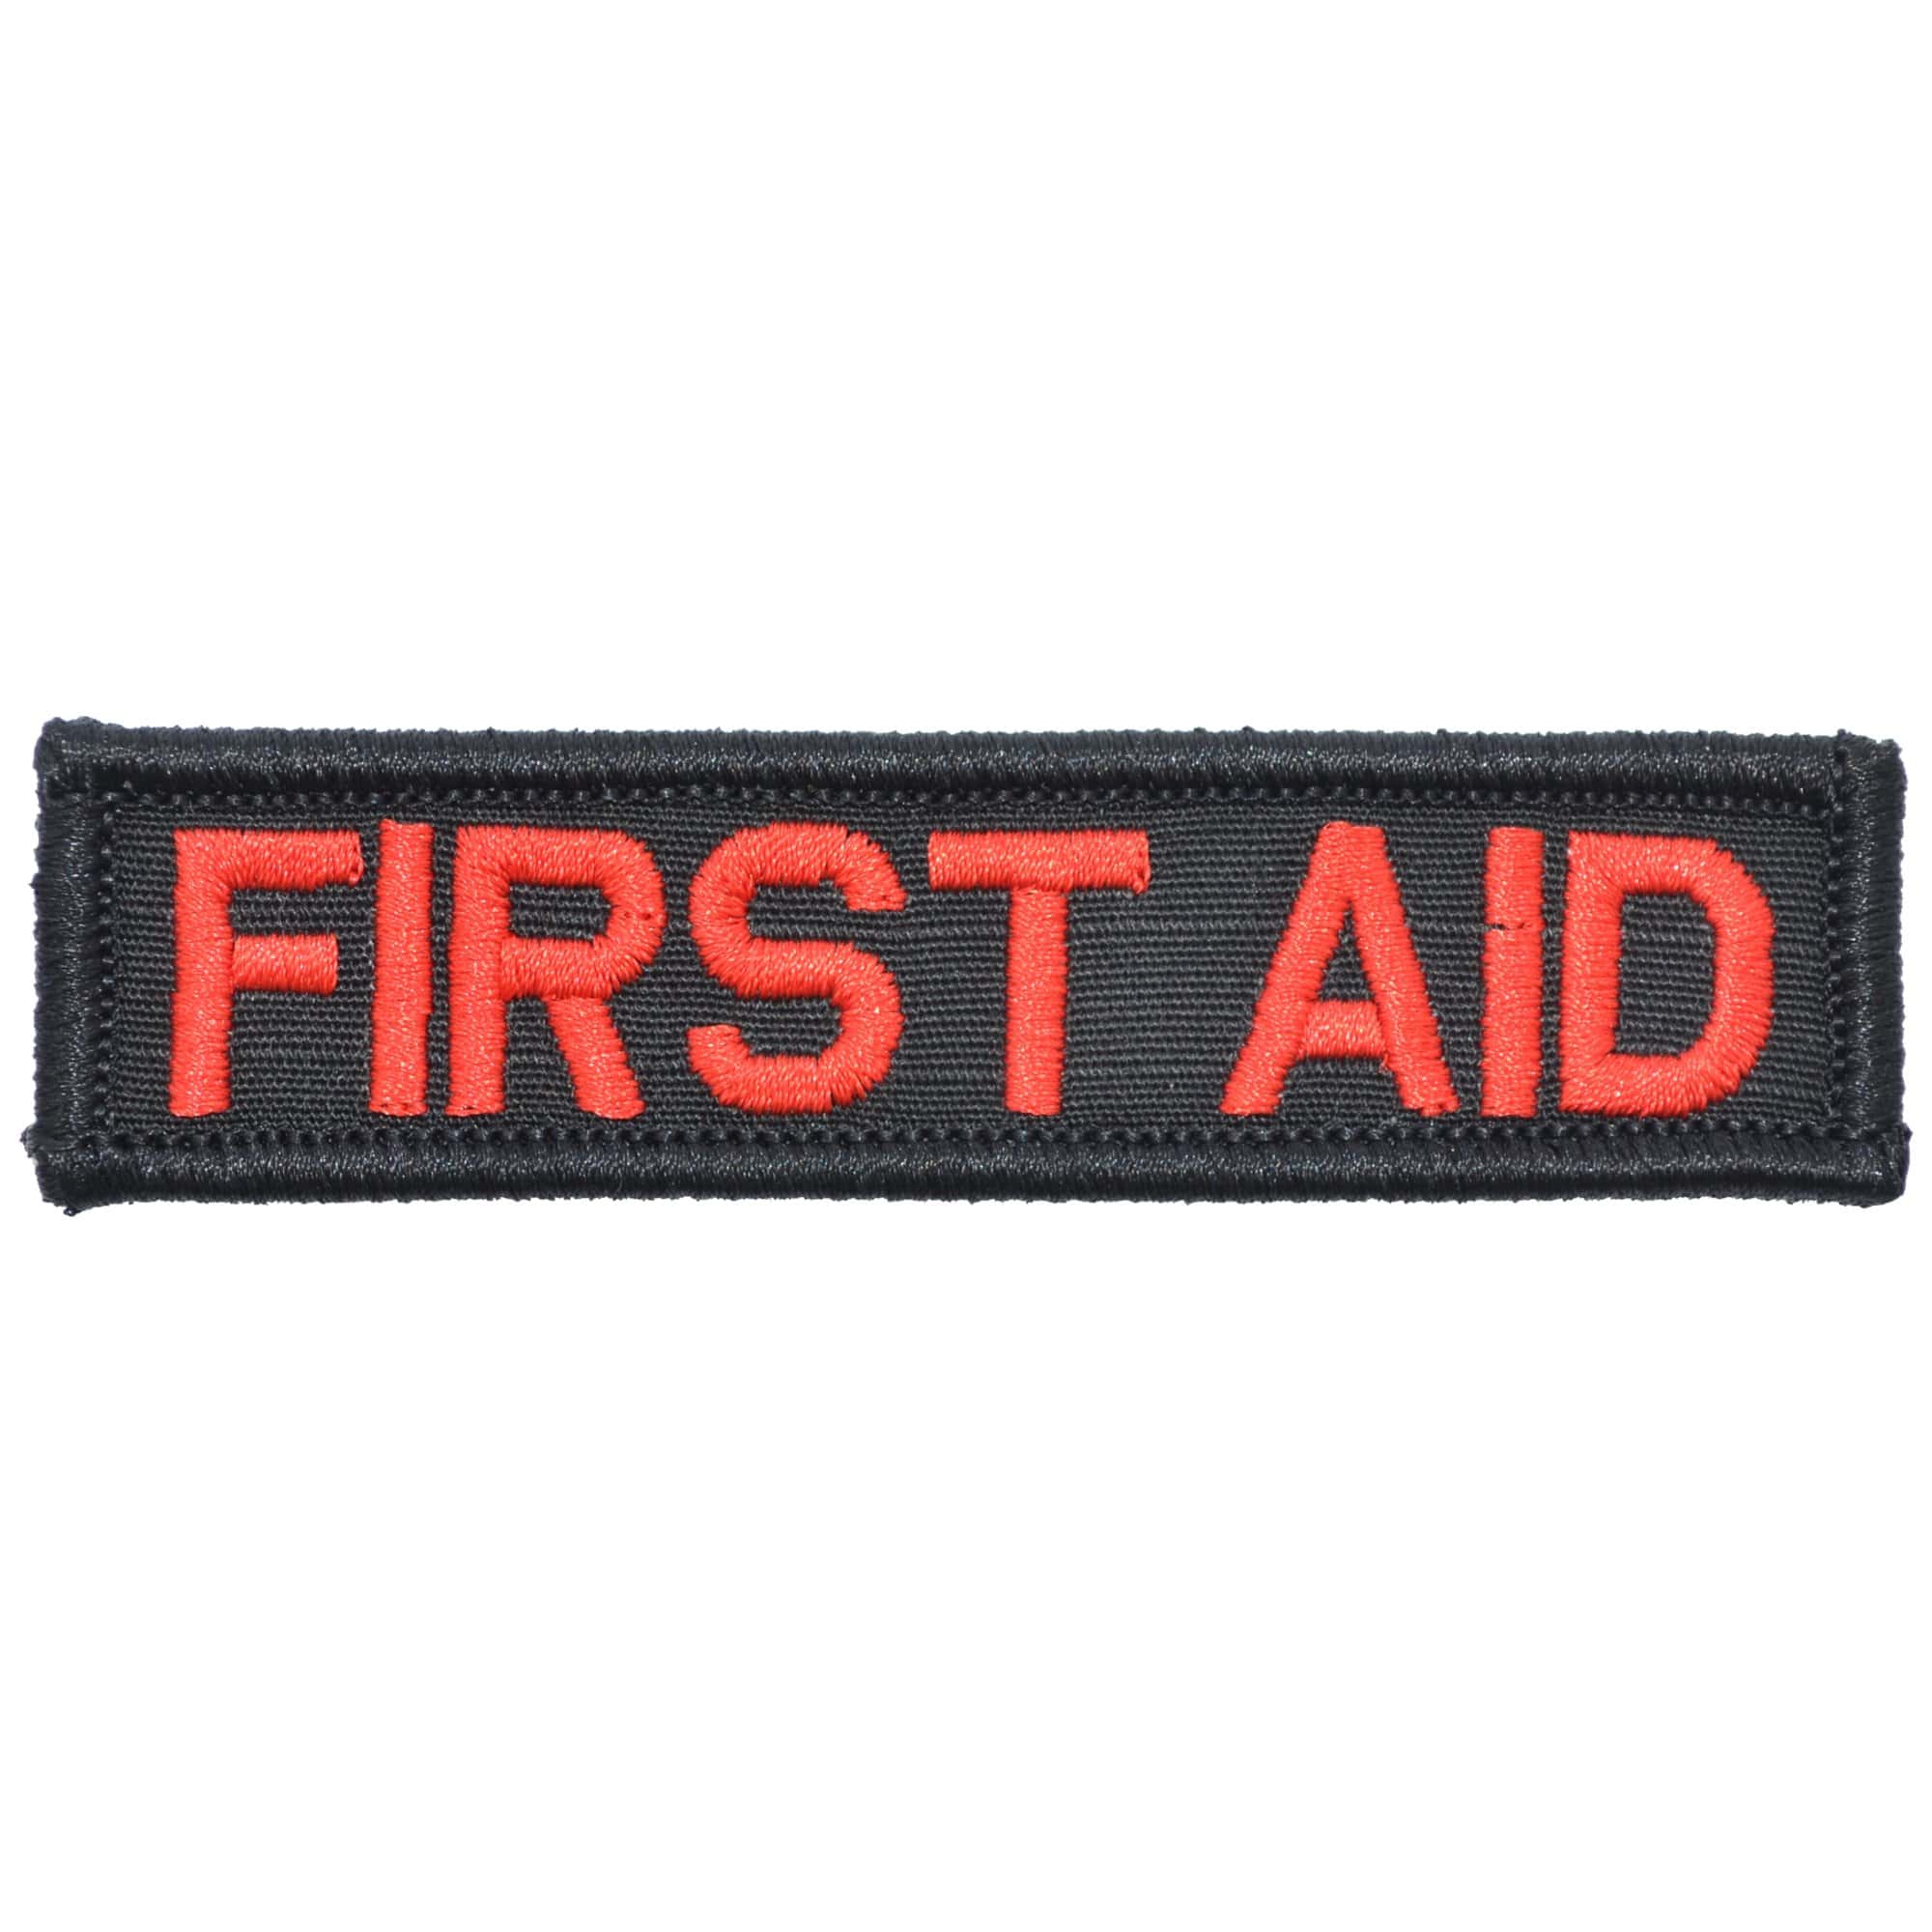 First Aid Prepared Patch